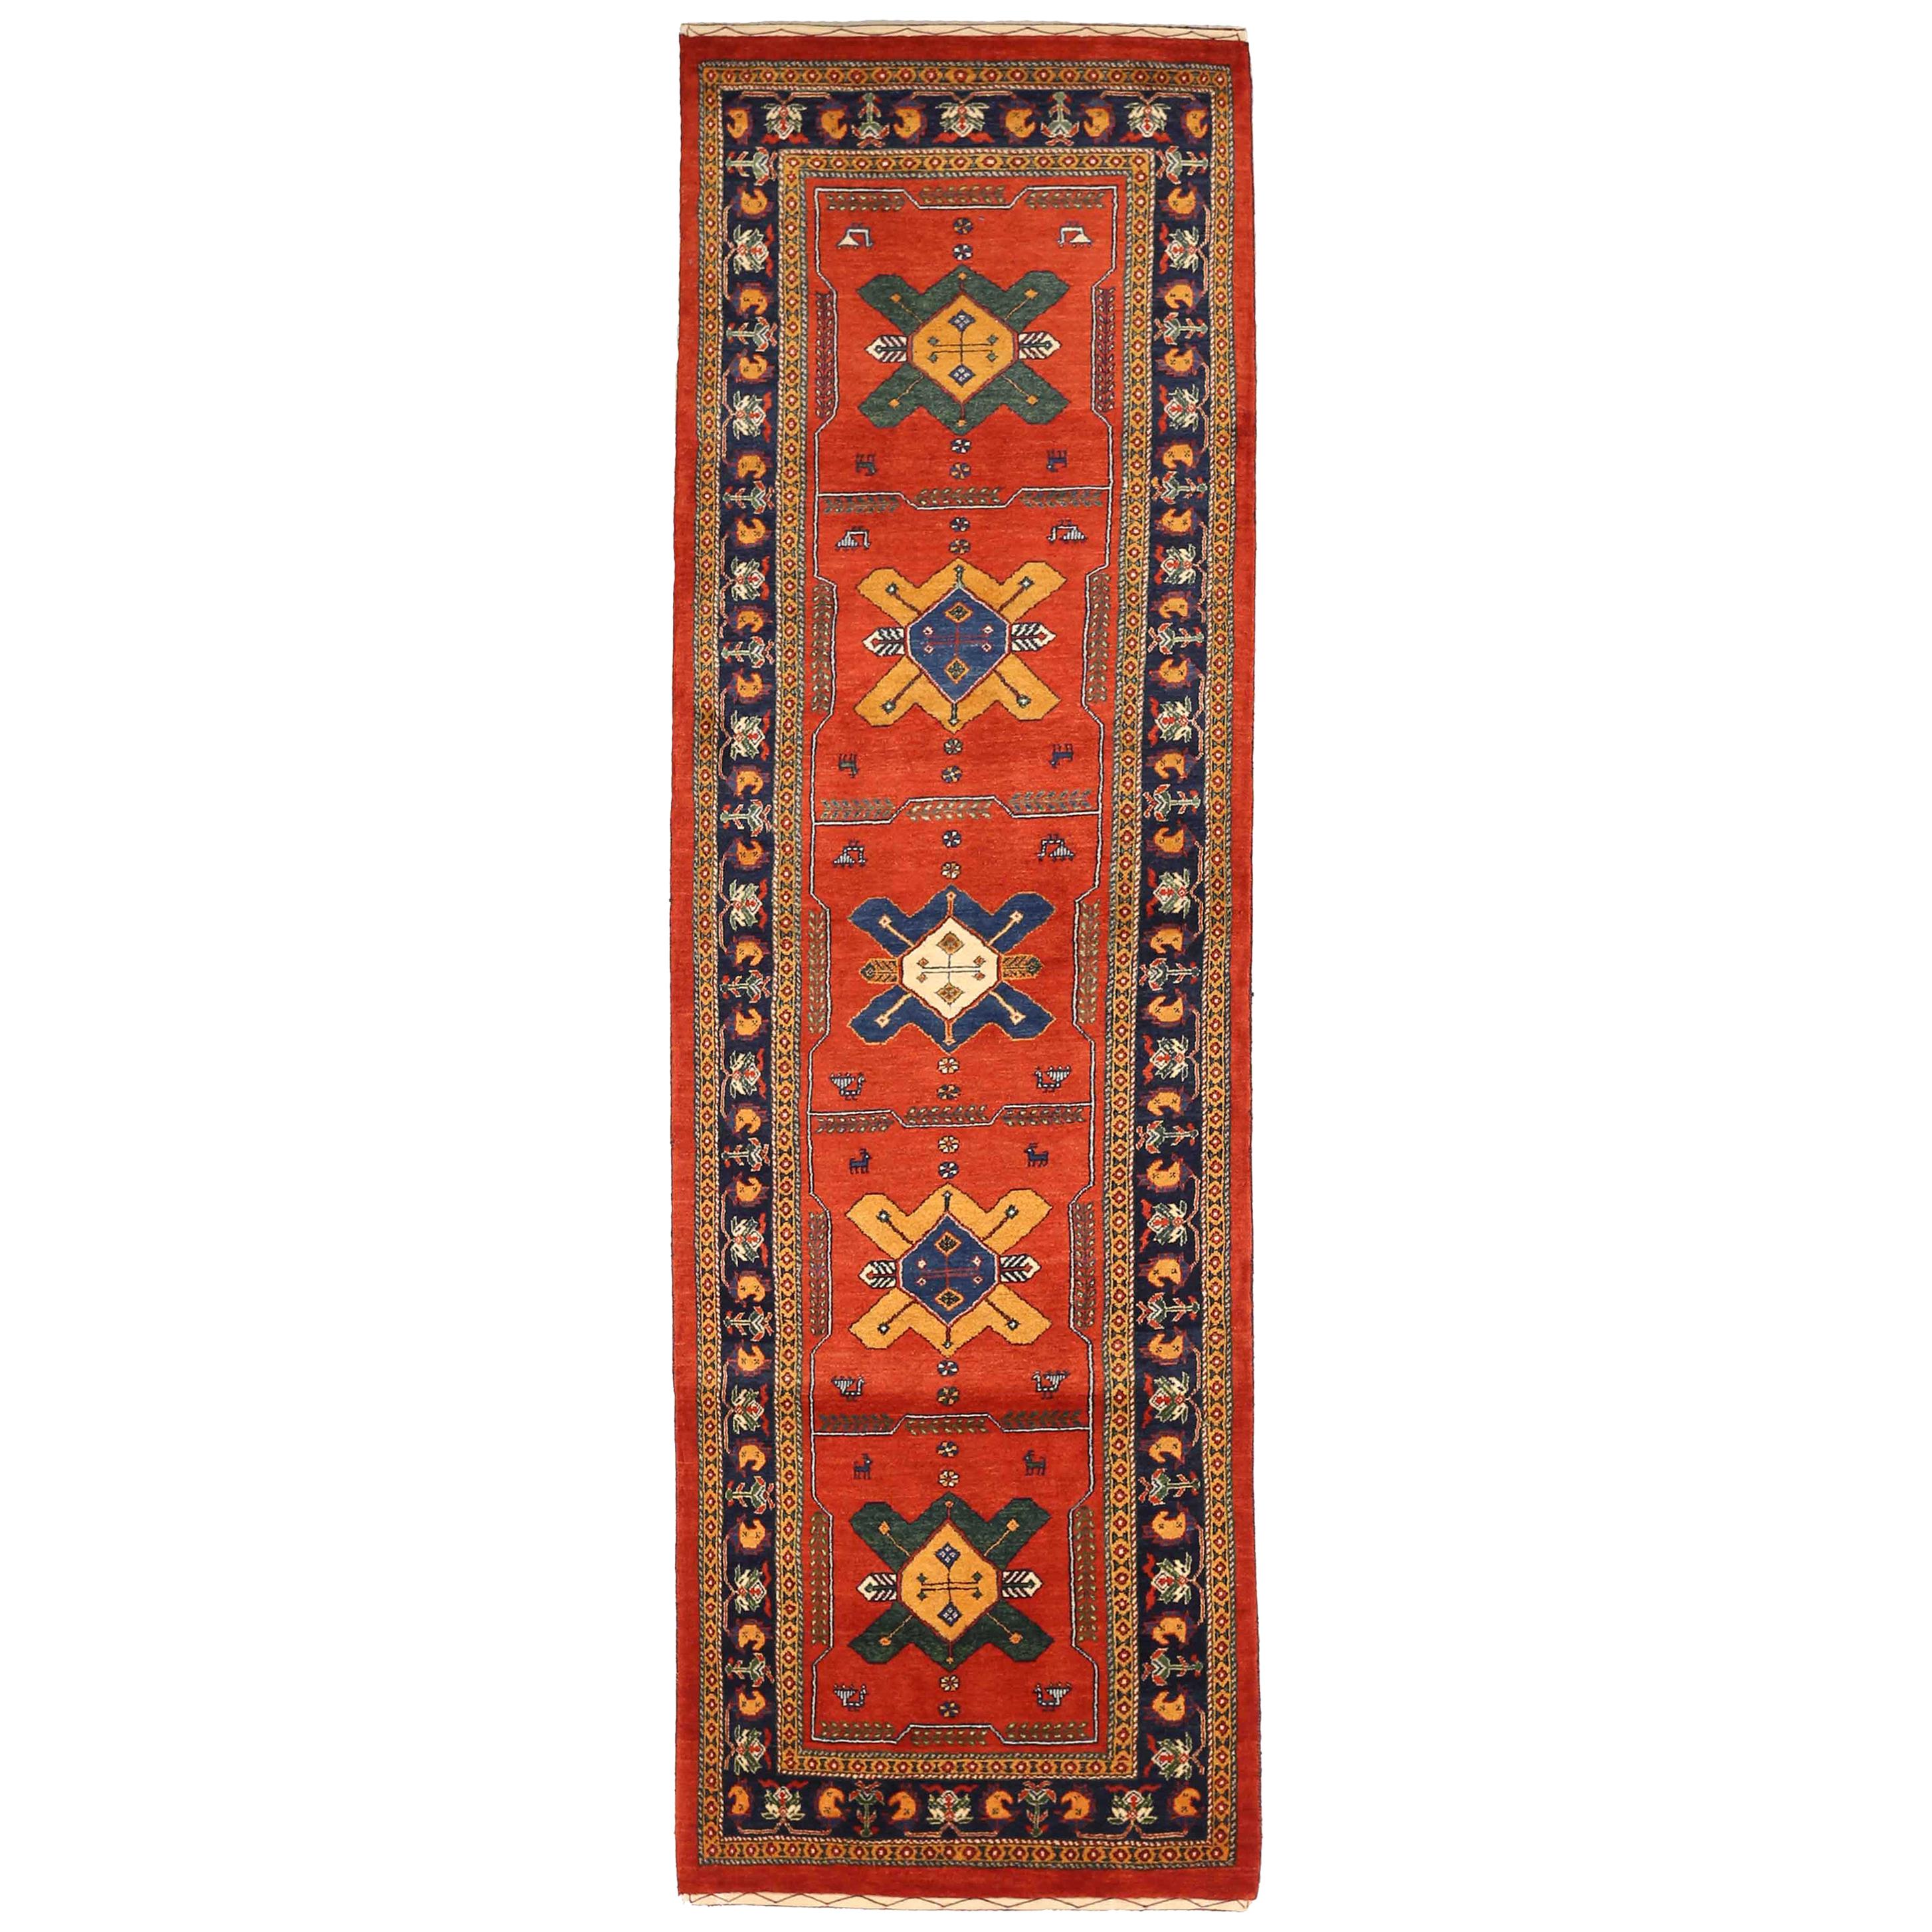 Antique Persian Runner Rug Gabbeh Design